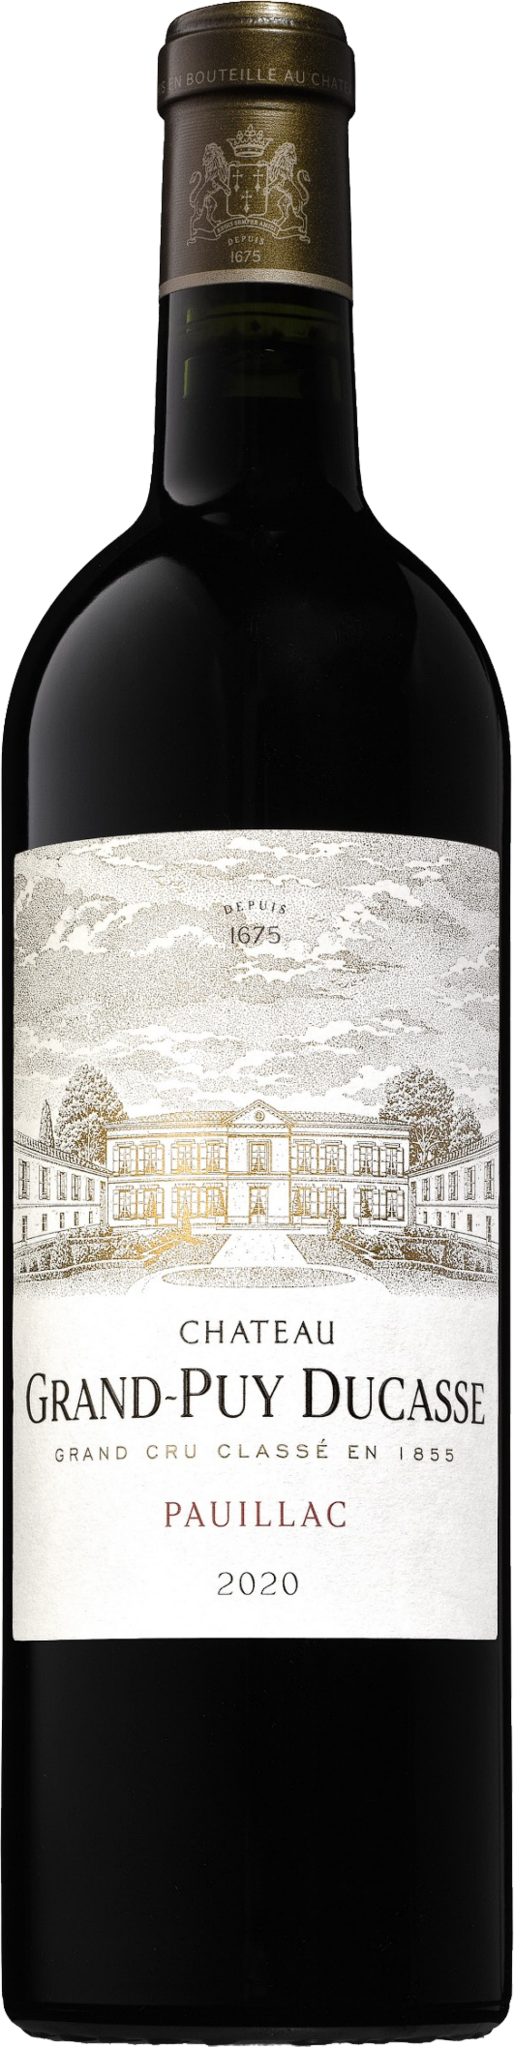 Frankrijk wijnen Pauillac prijzen - Château Vin Bordeaux, 2020 5e Cru - Ducasse scherpe - bijzondere voor Unique Grand-Puy Pauillac,